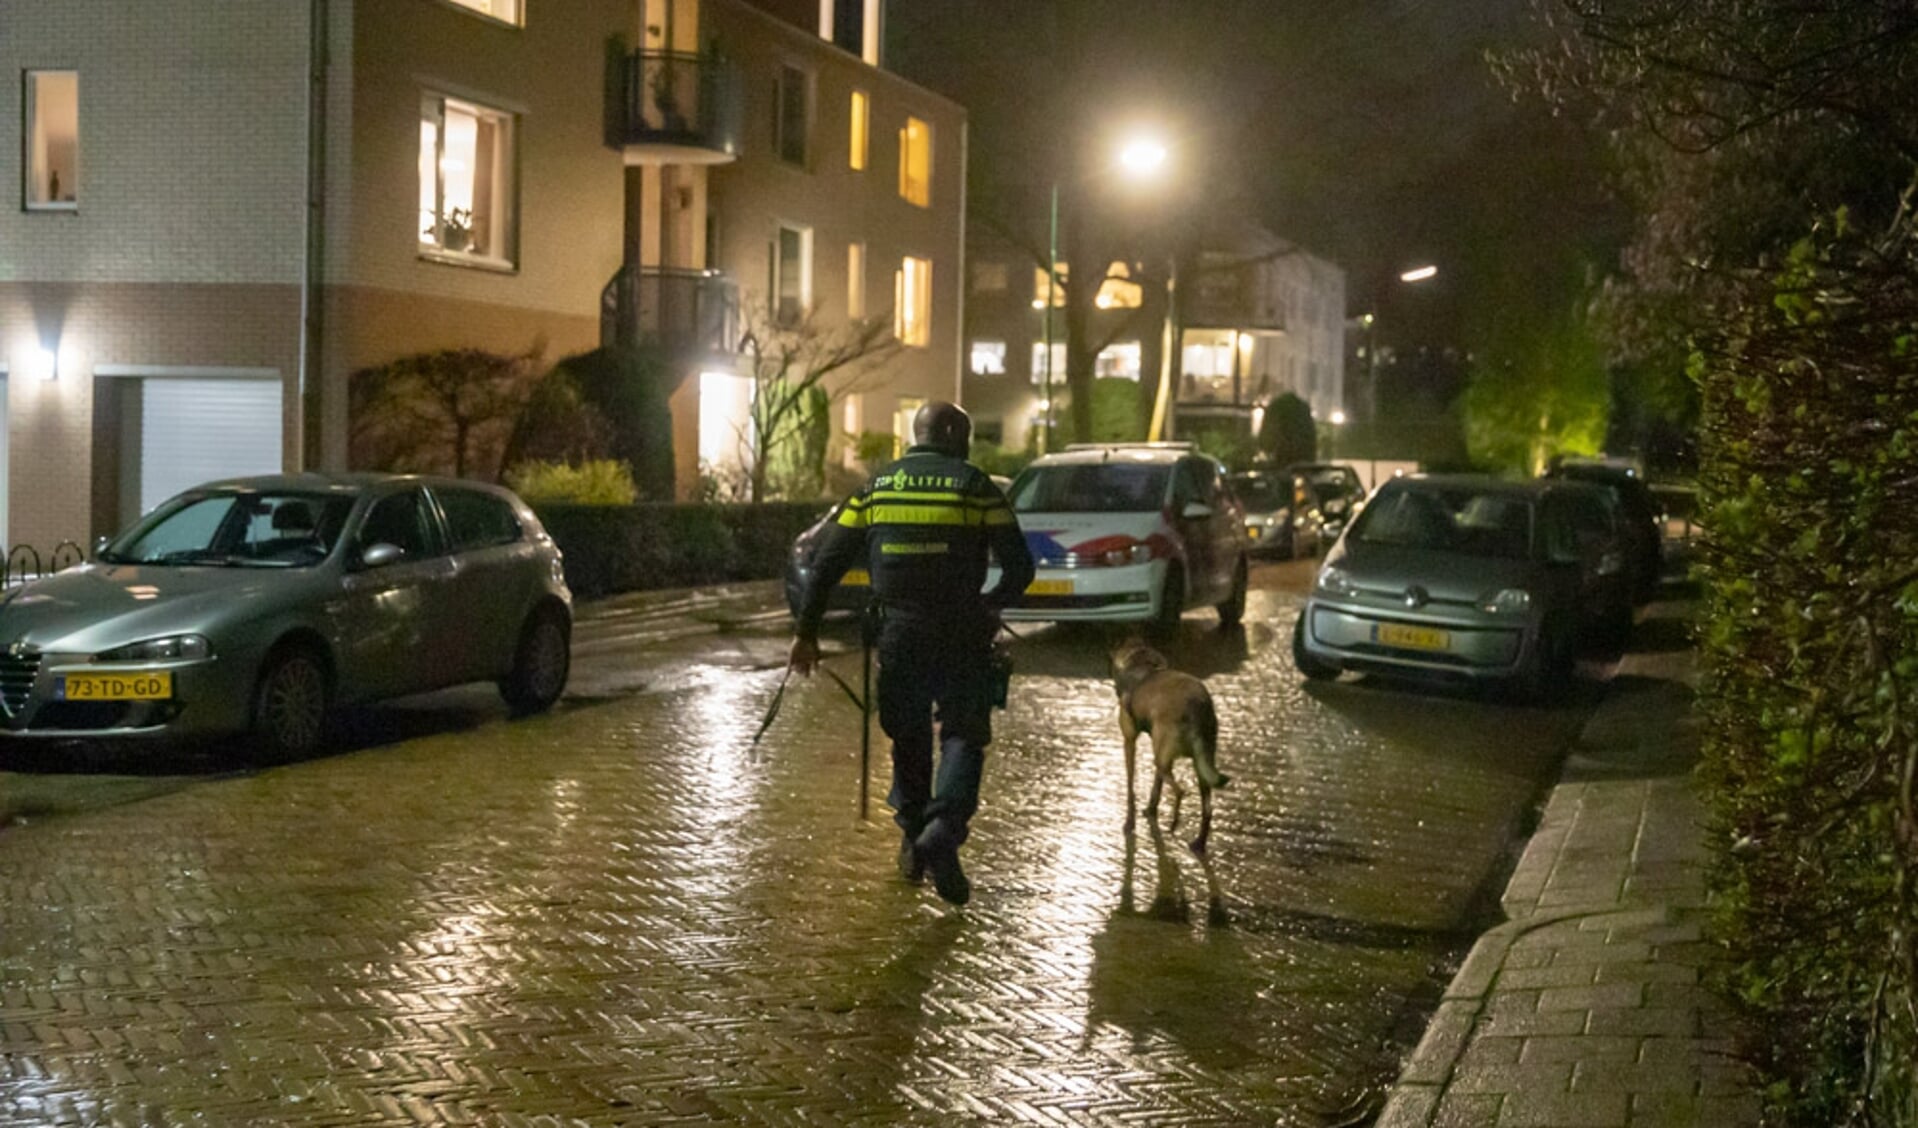 Zoektocht politie na poging inbraak centrum Baarn. 